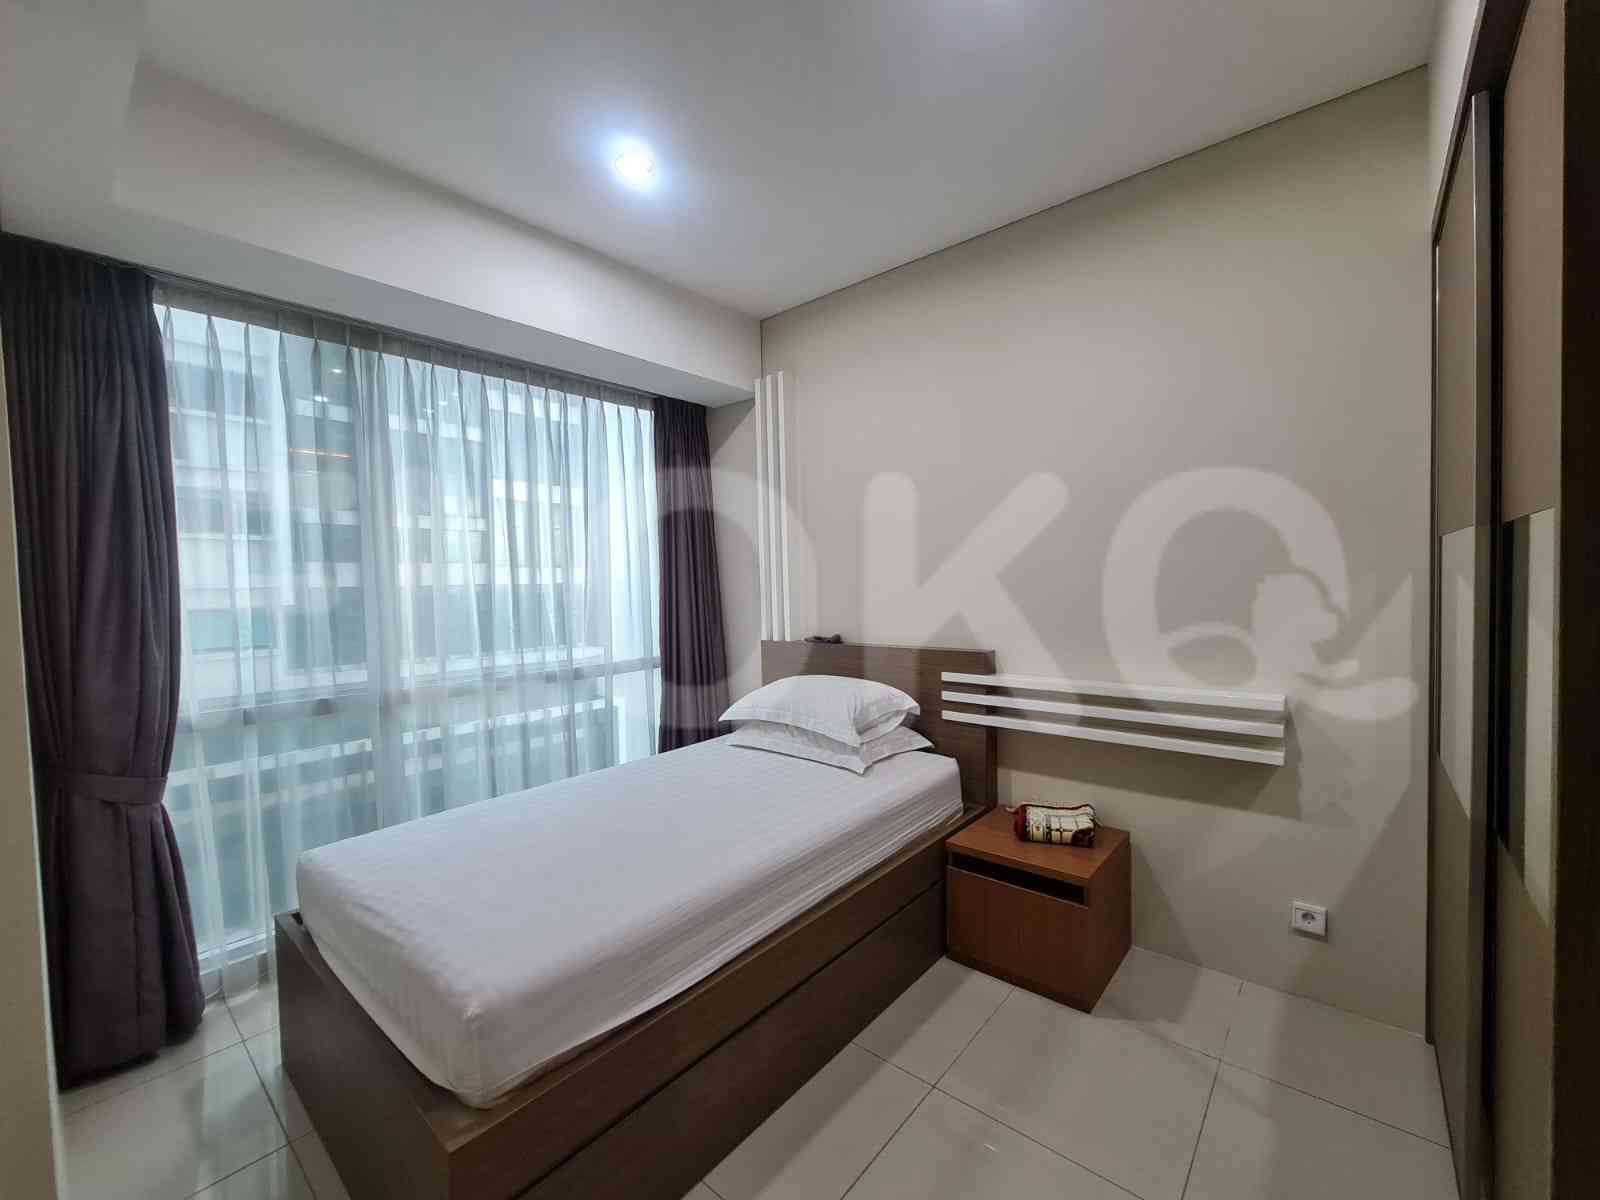 2 Bedroom on 9th Floor for Rent in Kemang Village Residence - fke4cf 5